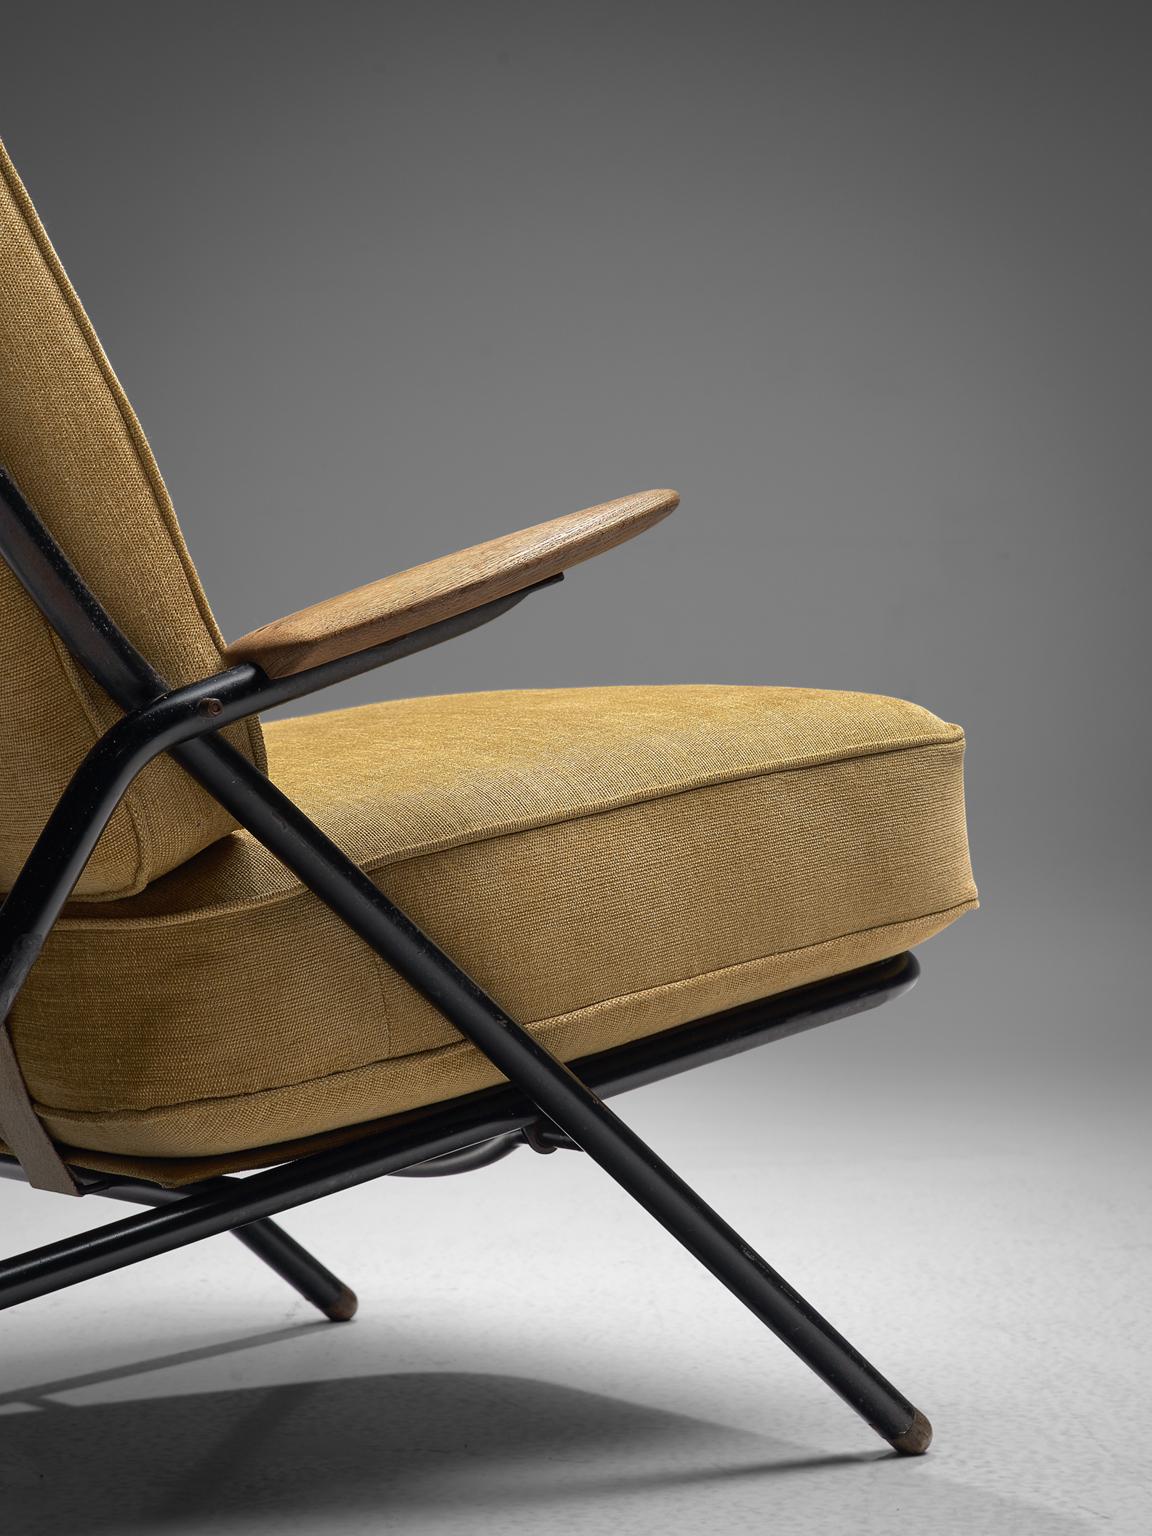 Hans J. Wegner Iconic Sawbuck Lounge Chair in Yellow Upholstery (Mitte des 20. Jahrhunderts)